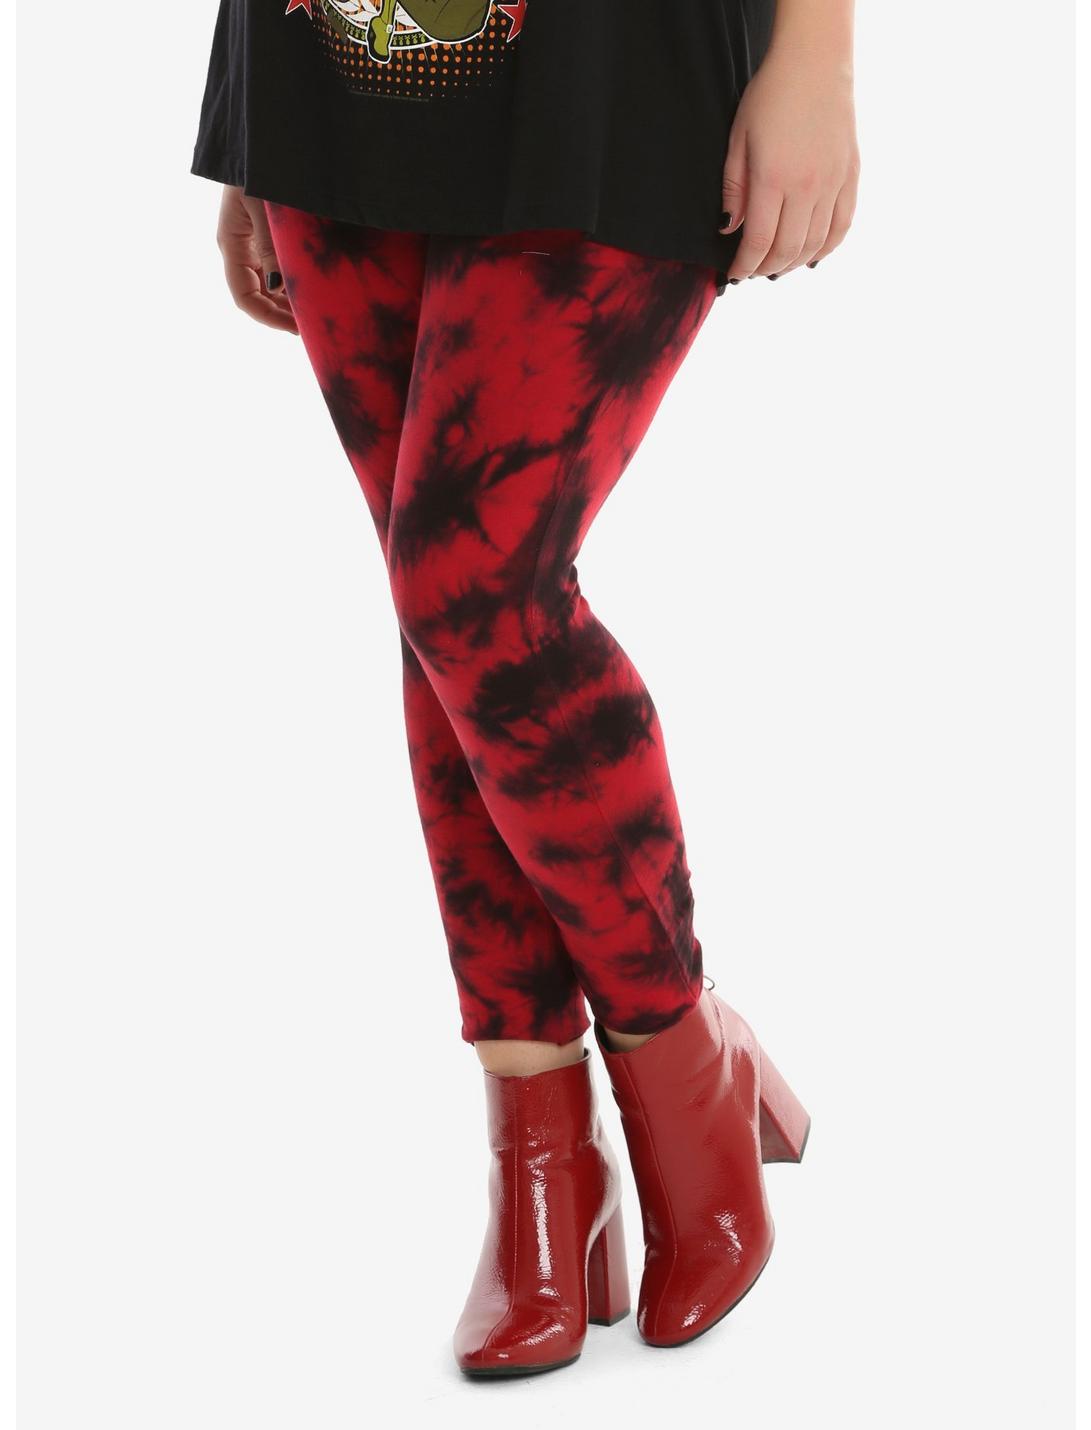 Blackheart Red & Black Tie-Dye Leggings Plus Size, RED, hi-res